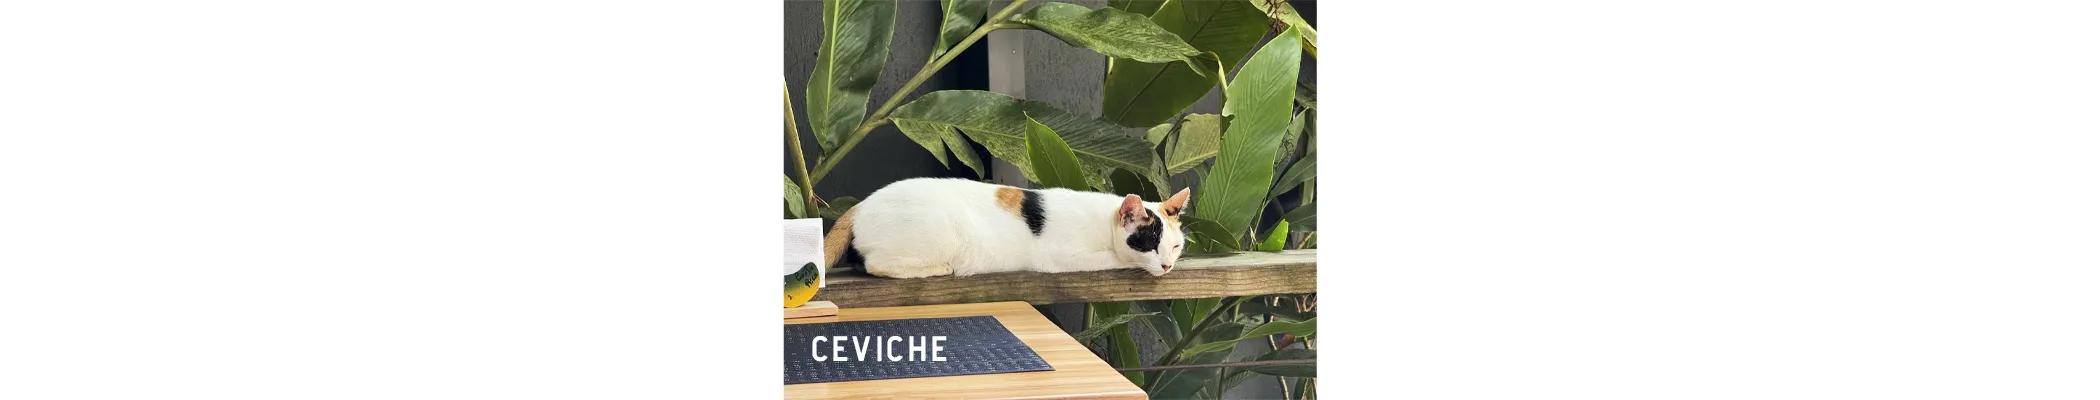 Ceviche the Cat